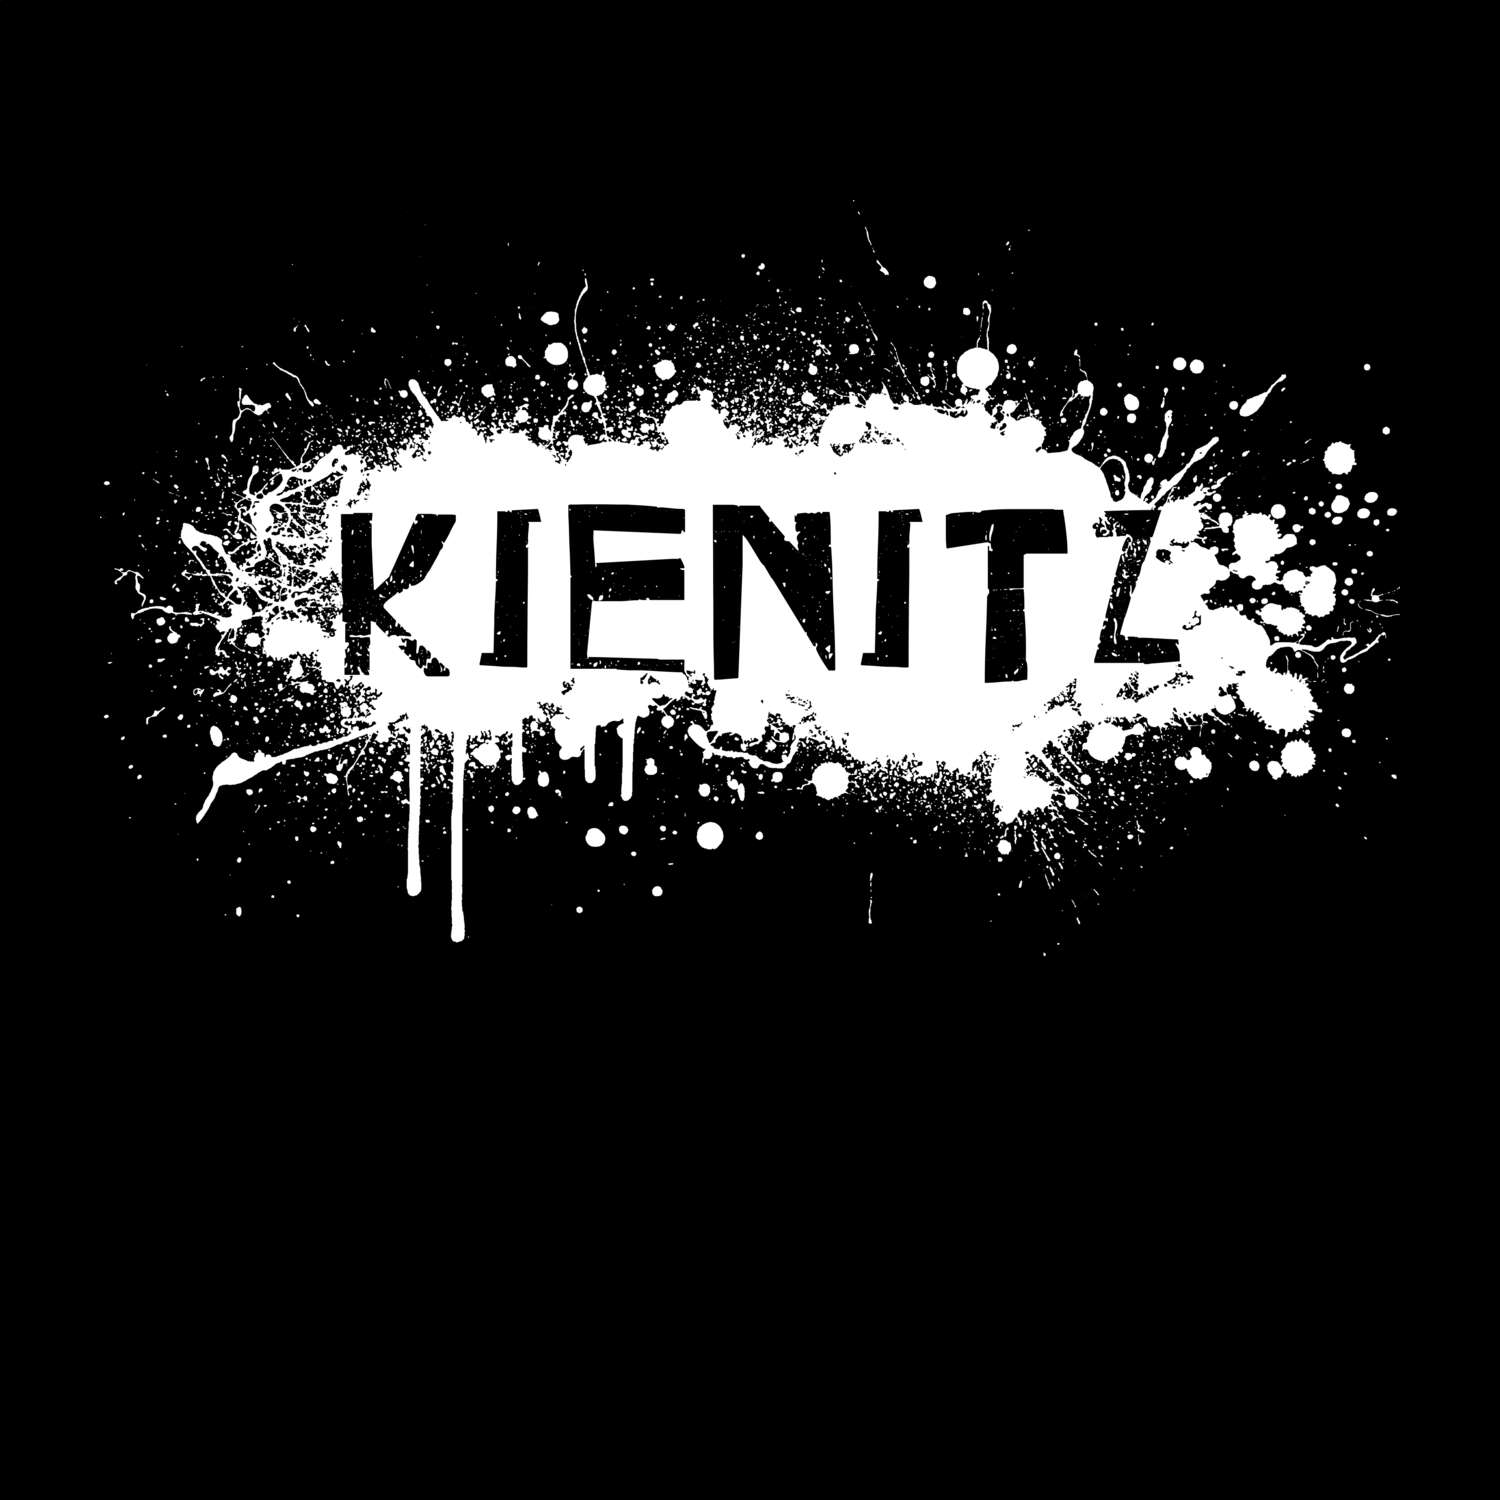 Kienitz T-Shirt »Paint Splash Punk«